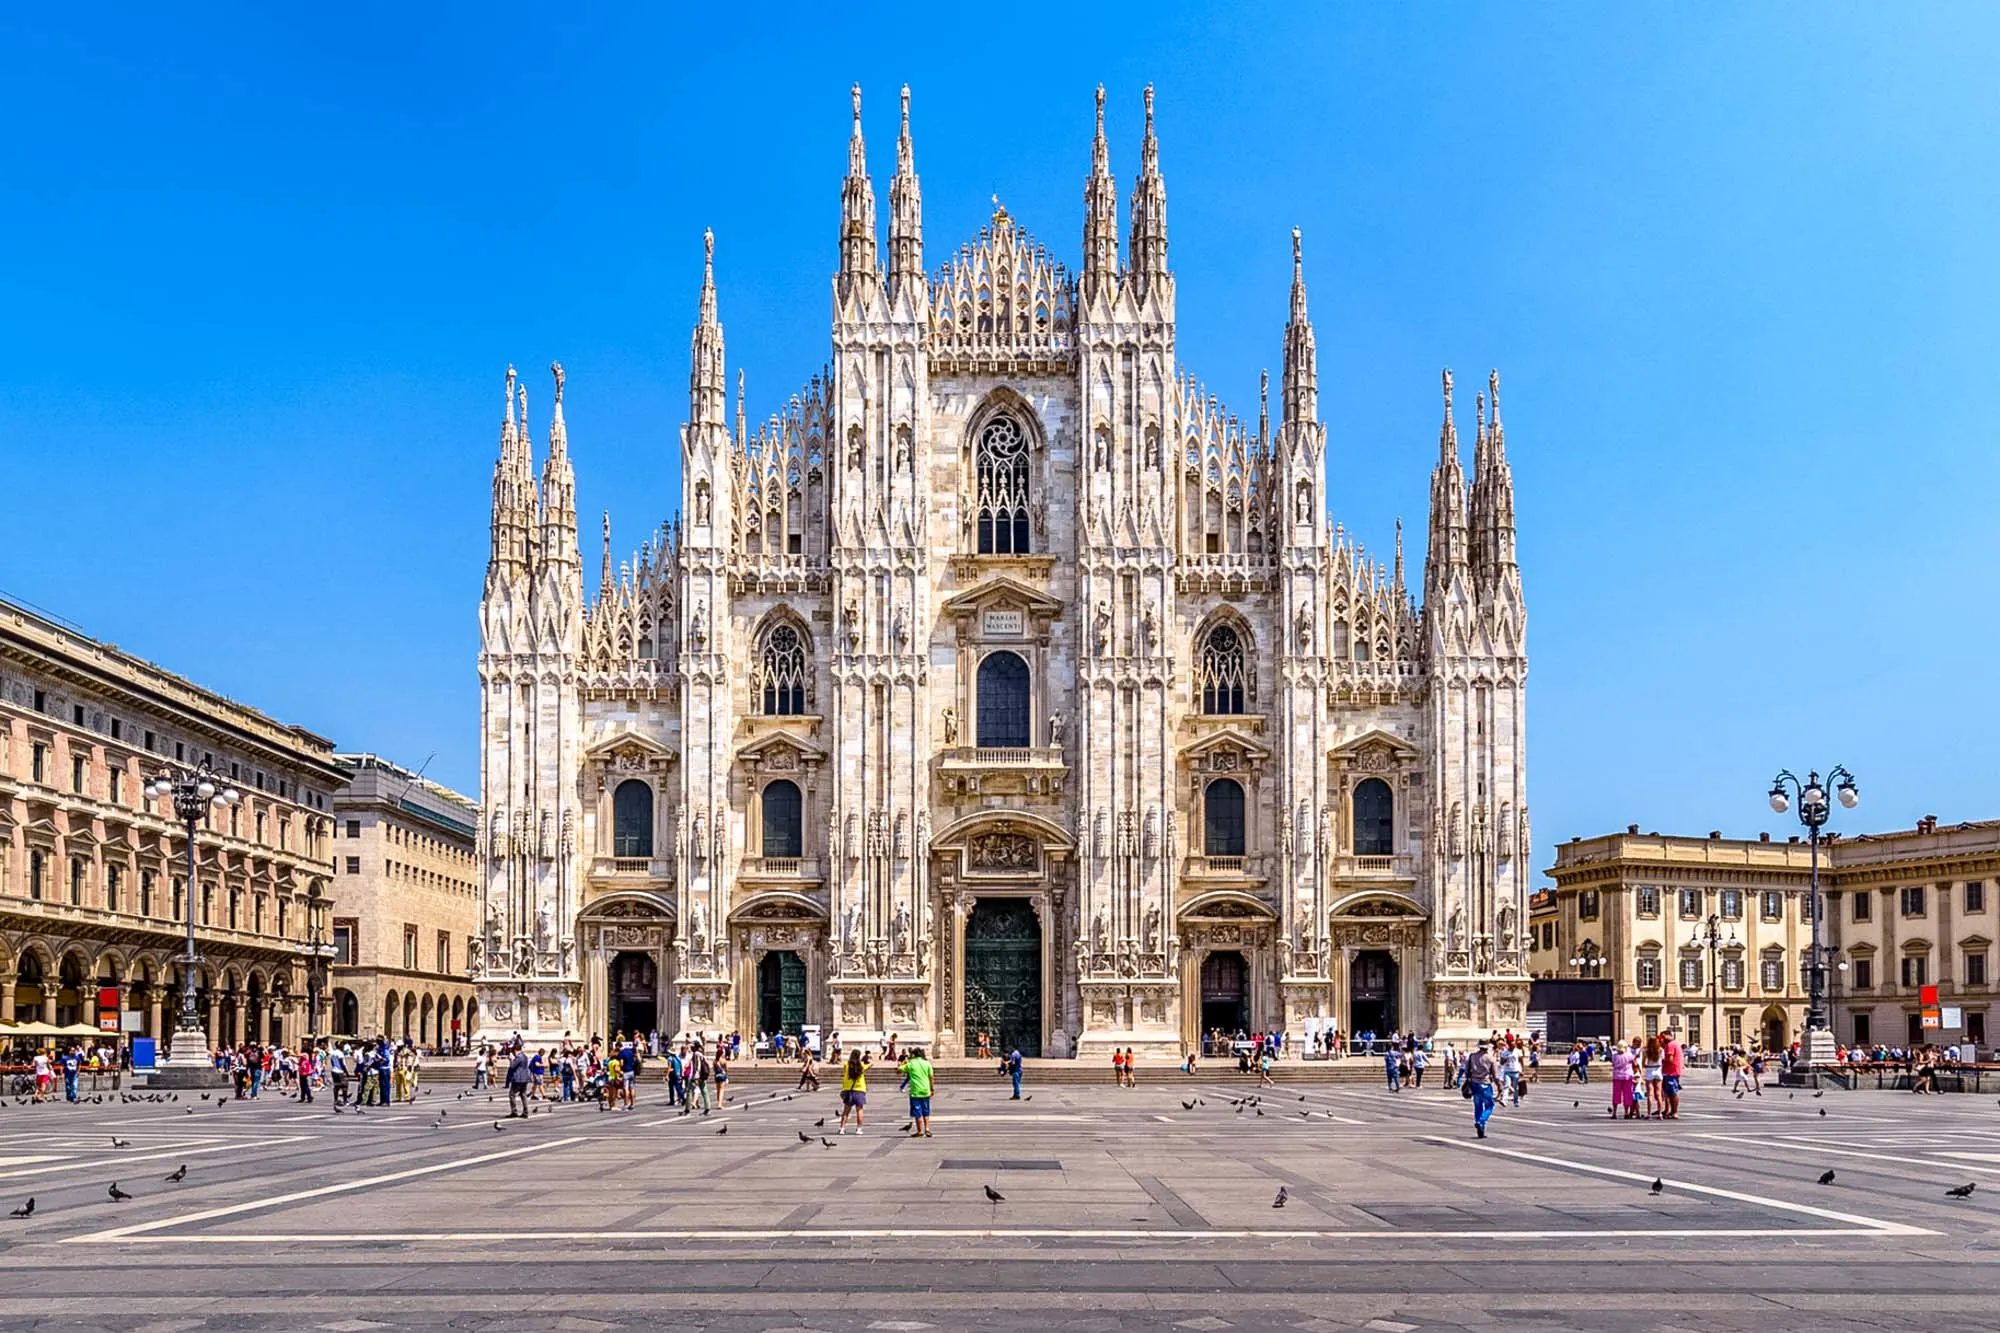 Exterior of the Duomo in Milan